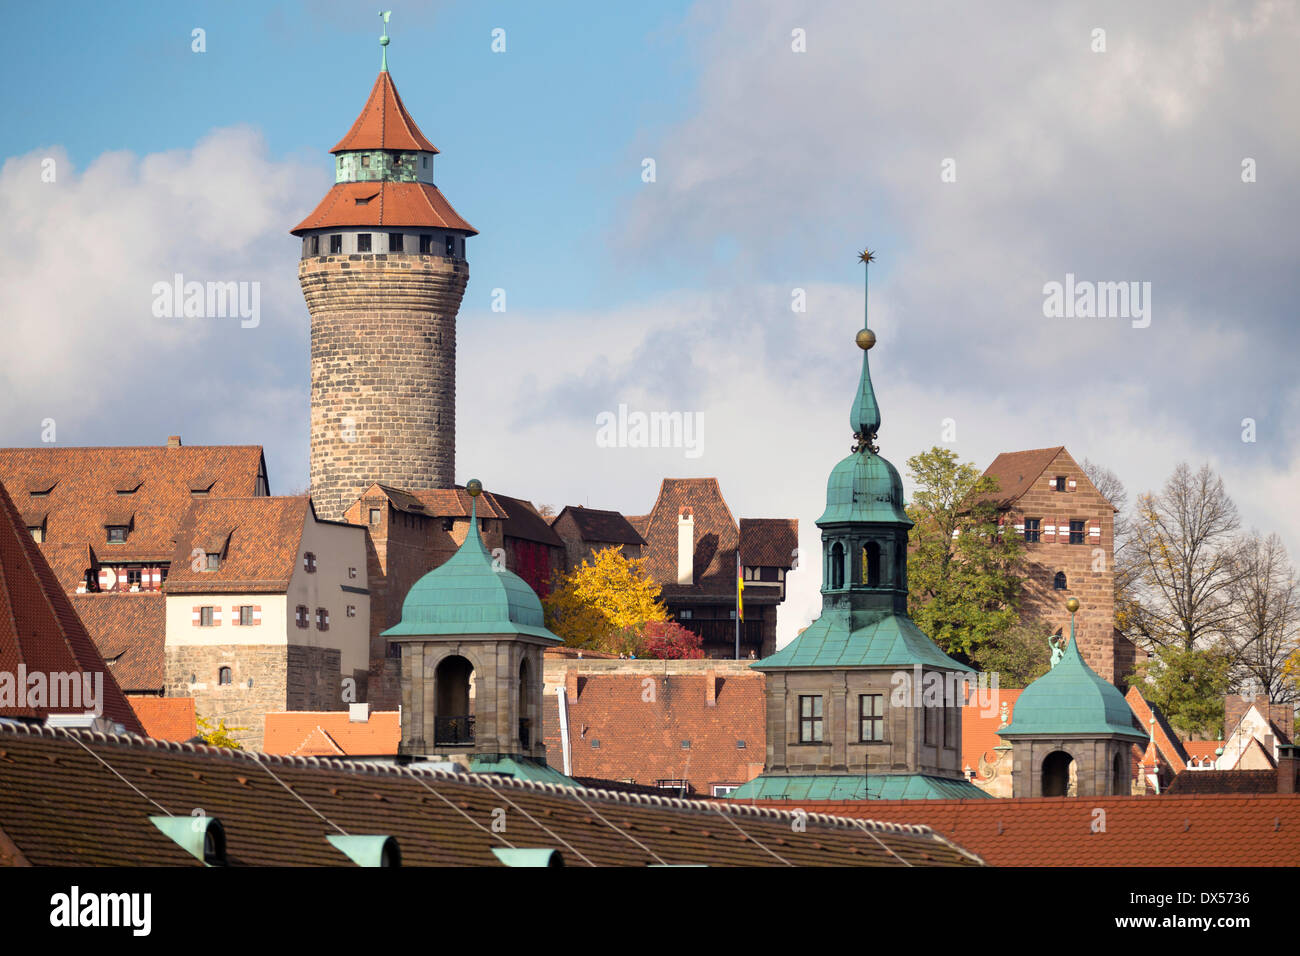 Sinwellturm Tower, part of the Nuremberg Imperial Castle, Nuremberg, Middle Franconia, Franconia, Germany Stock Photo